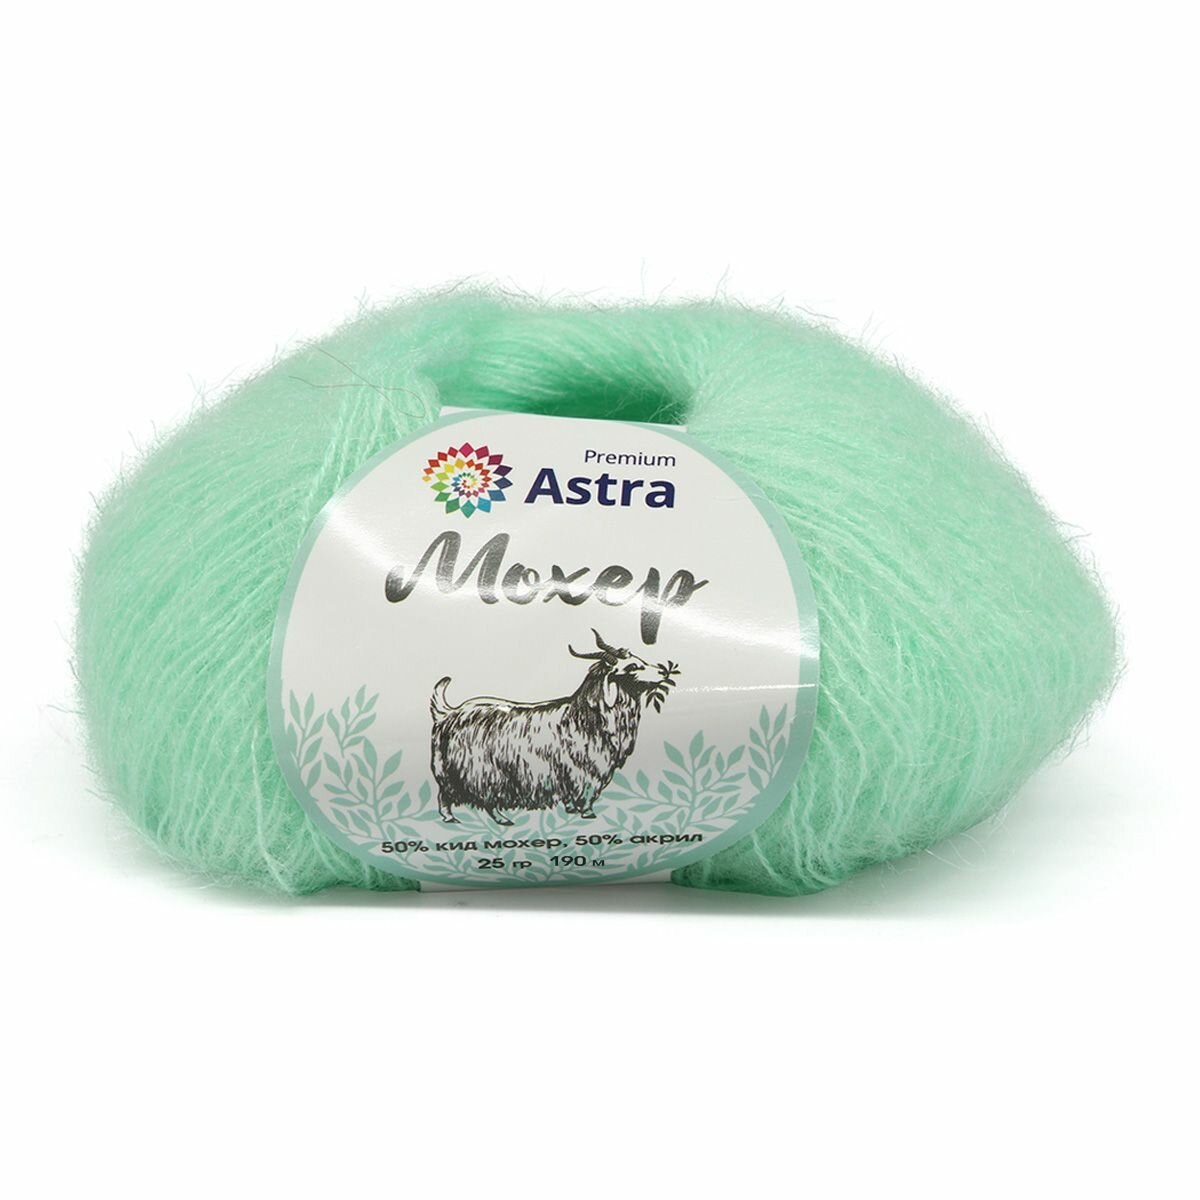 Пряжа для вязания Astra Premium 'Мохер' (Mohair) 25гр 190м (+/-5%) (50% кид мохер, 50% акрил) (05 мятный), 4 мотка